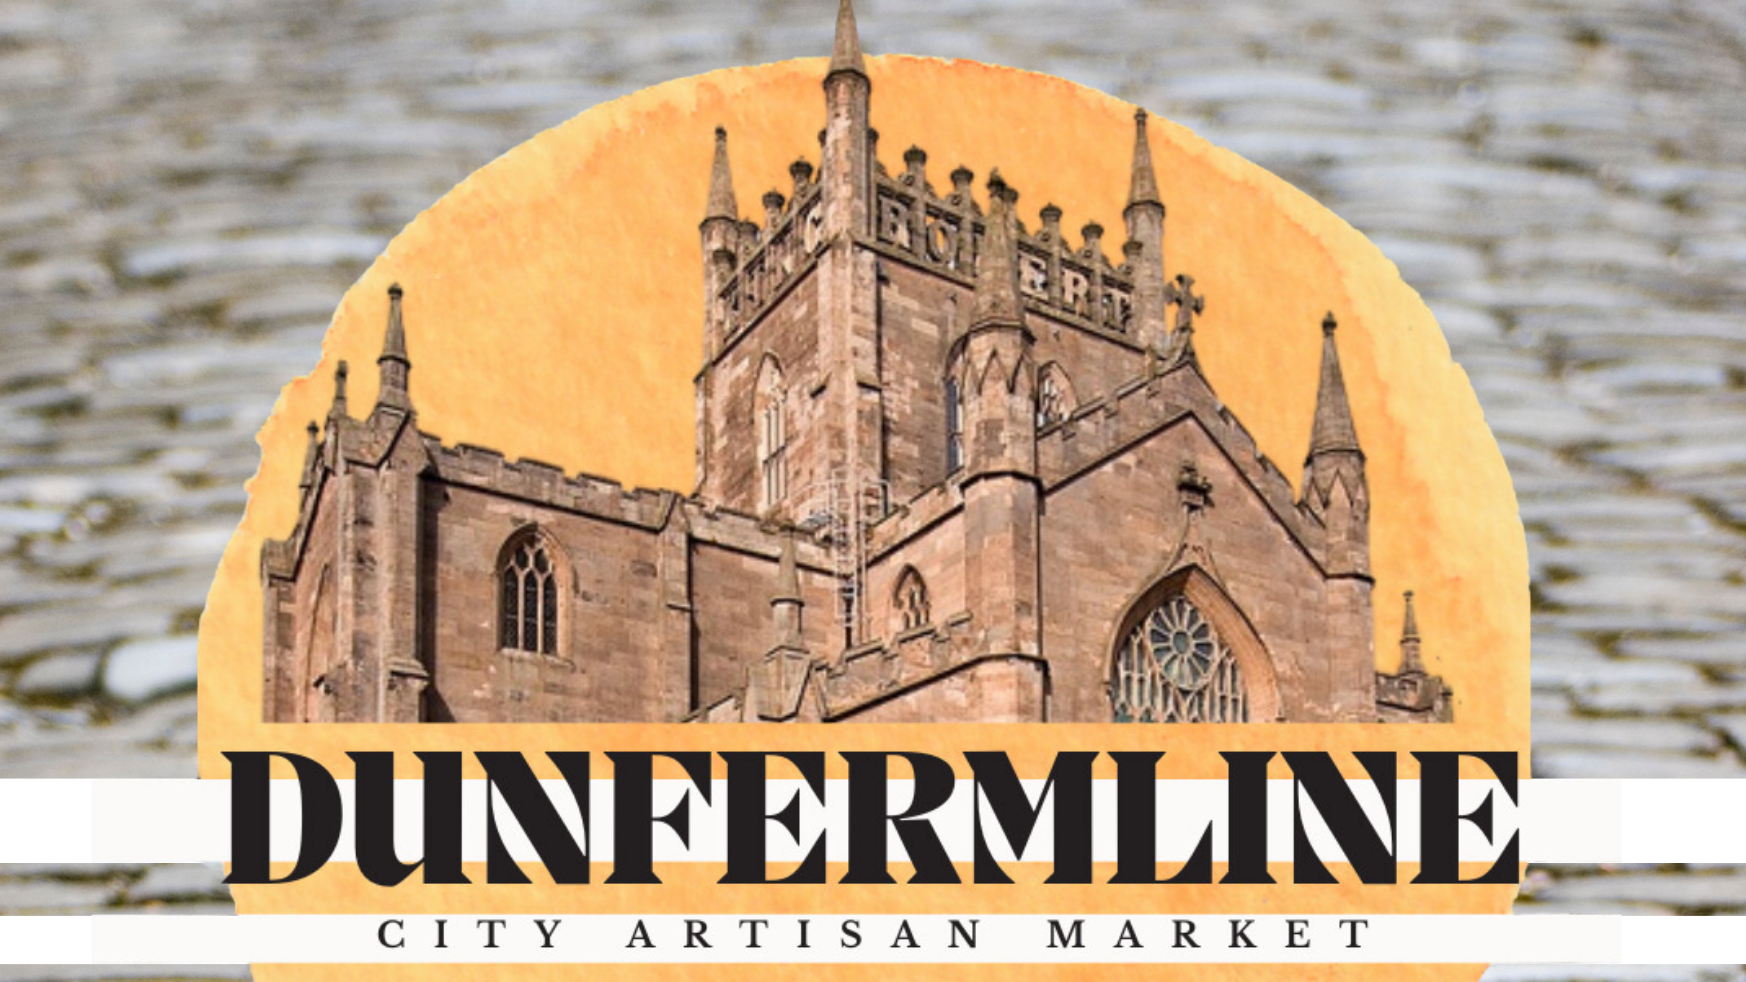 Dunfermline City Artisan Market - November 